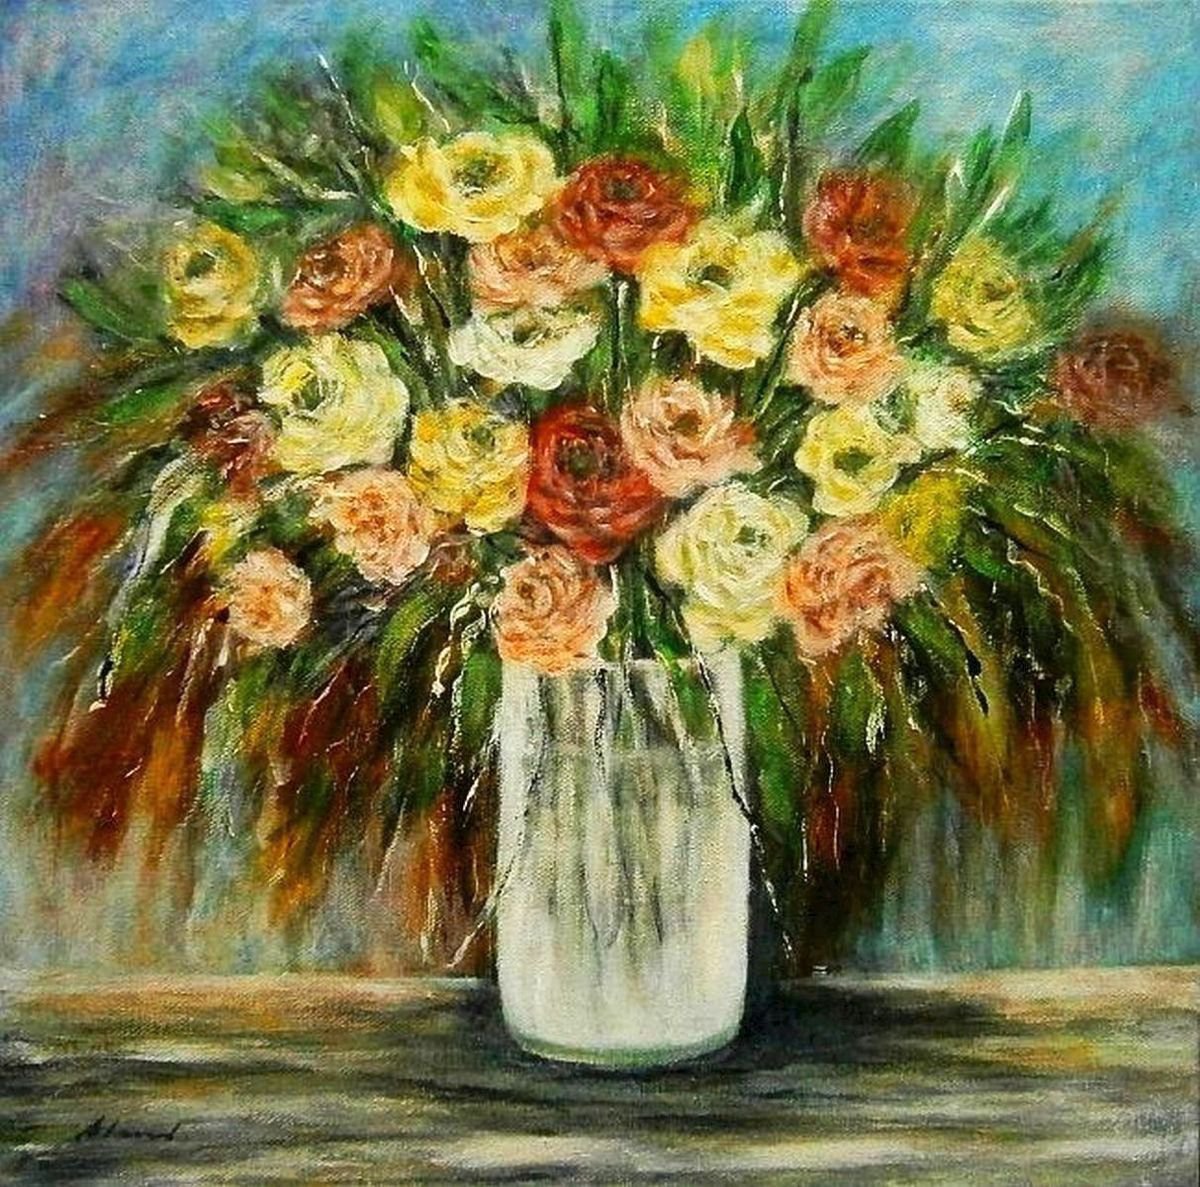 Bouquet of roses - still life.. by Emilia Urbanikova